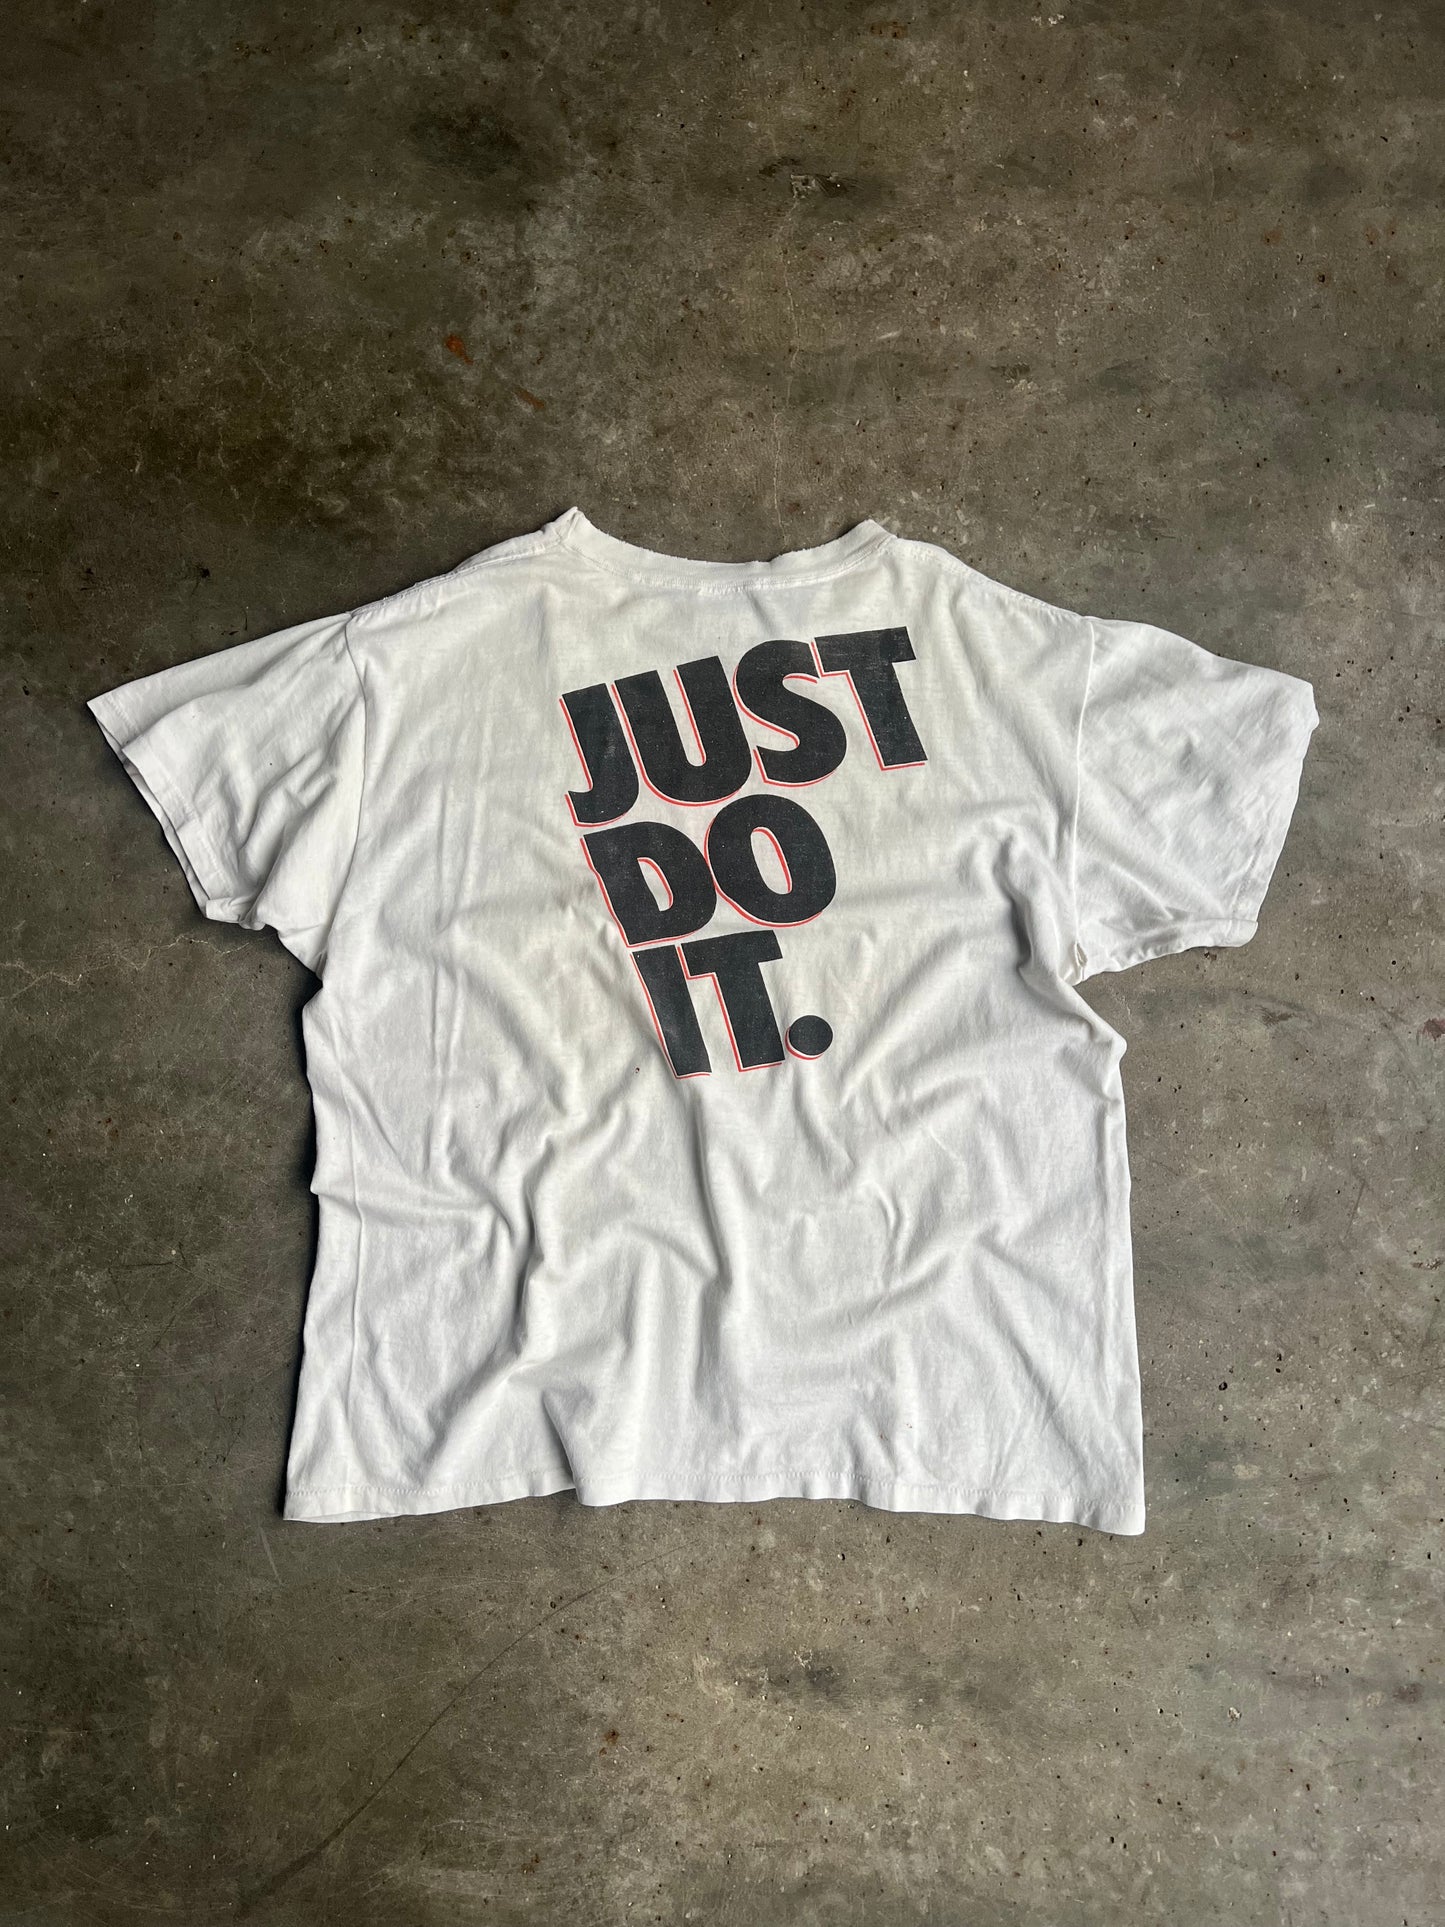 Vintage 90s Nike Shirt - XL